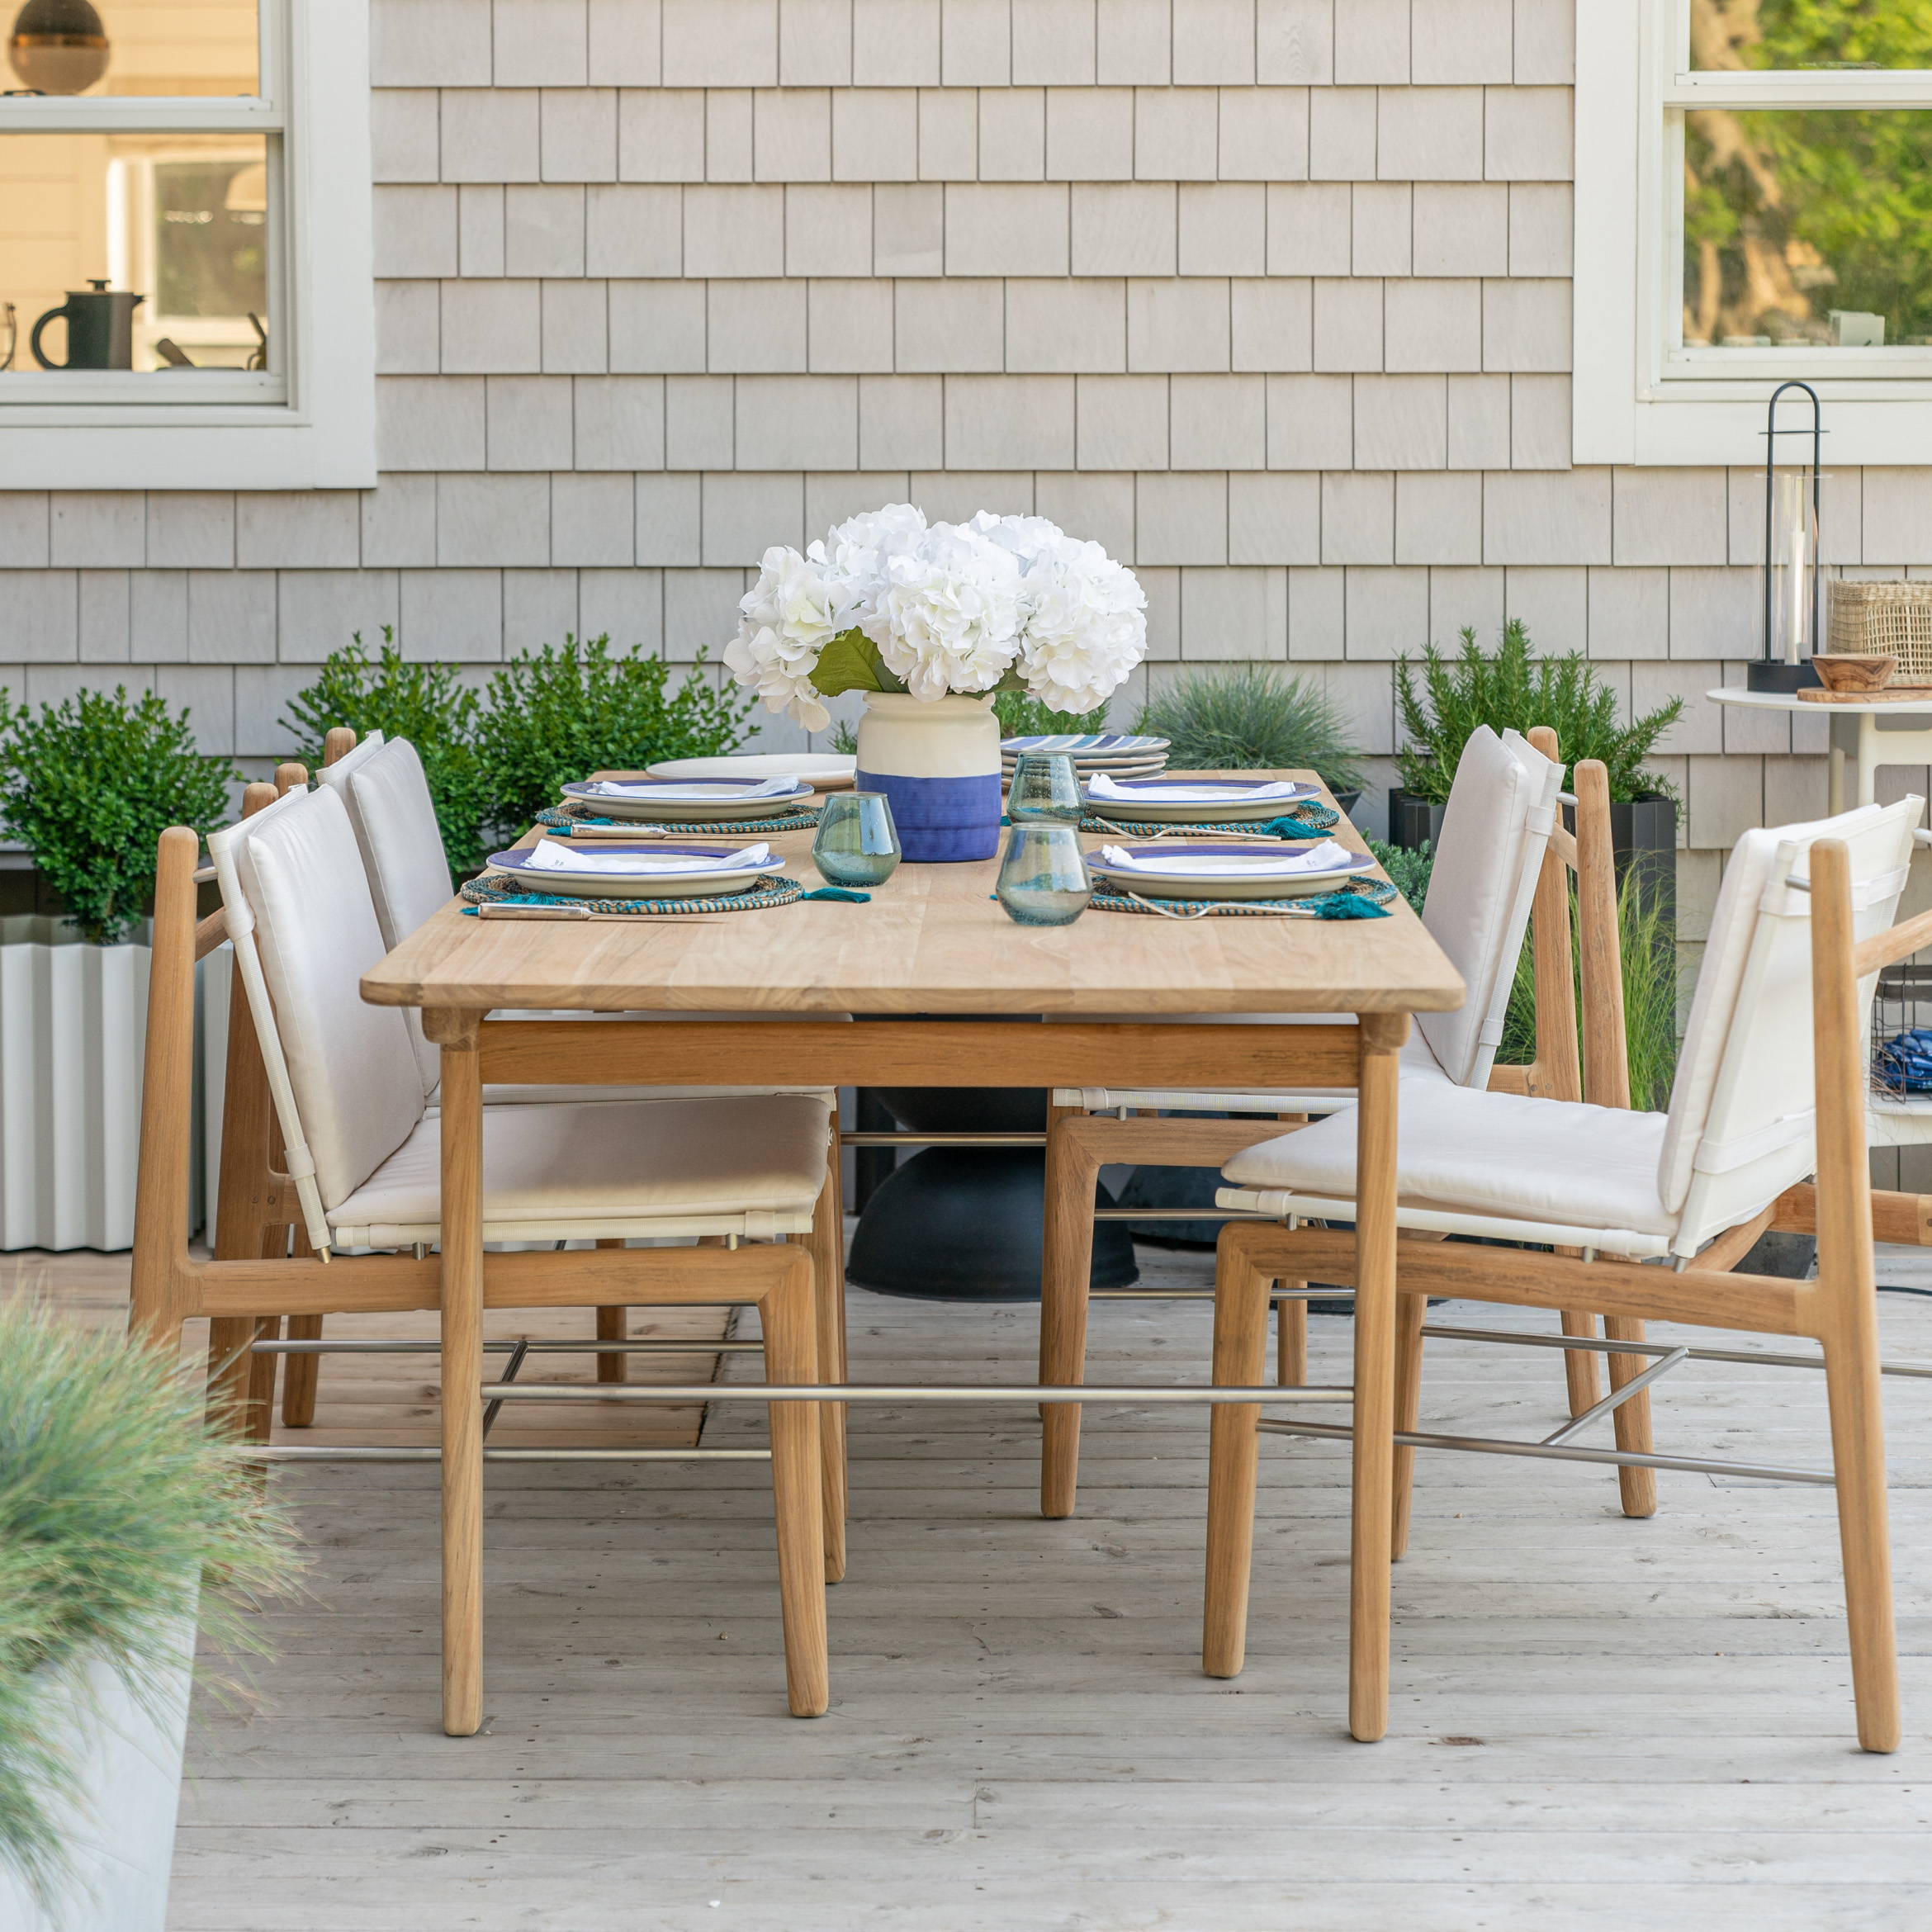 Finn dining table design within reach